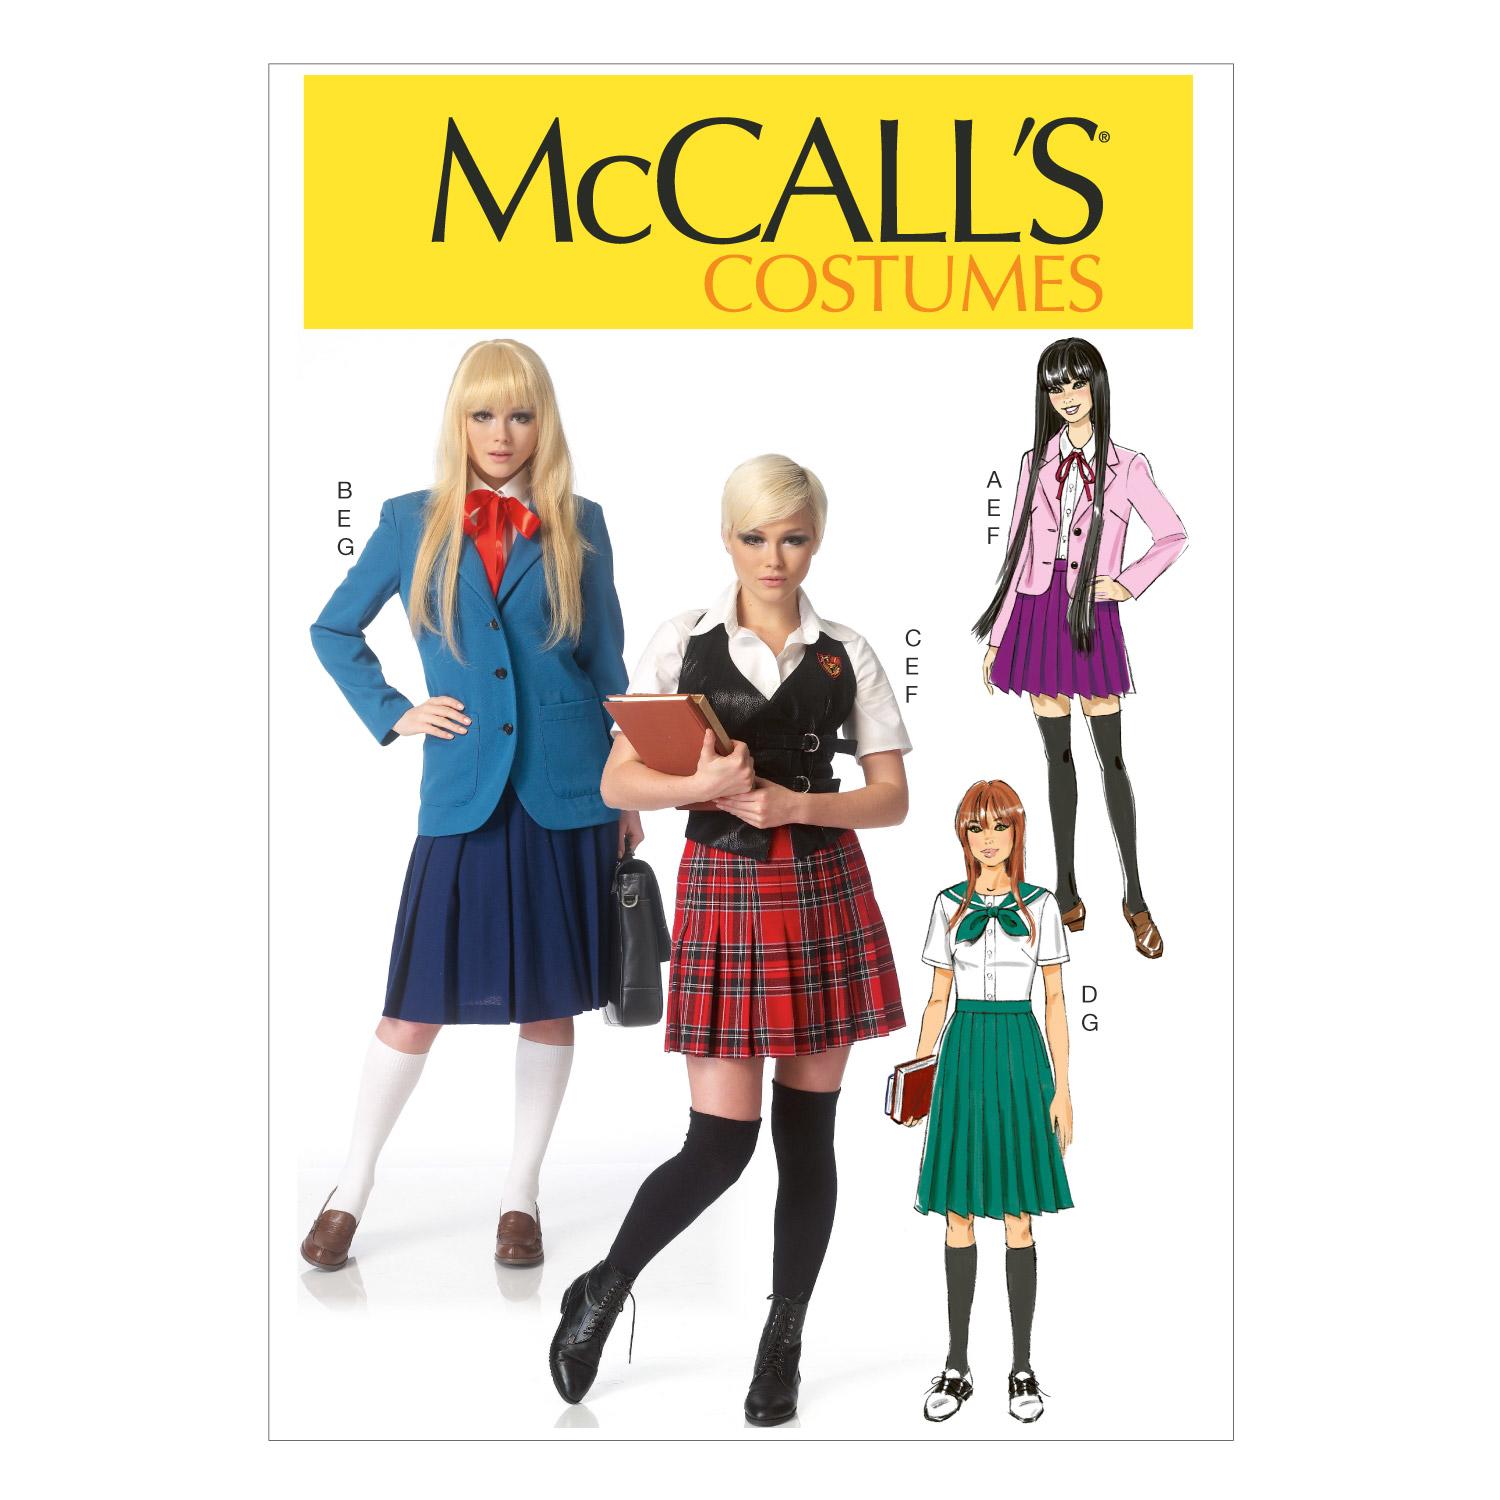 McCalls M7141 Coordinates, Costumes, Jackets, Skirts, Bustles & Petticoats, Tops, Shirts & Tunics, Vests